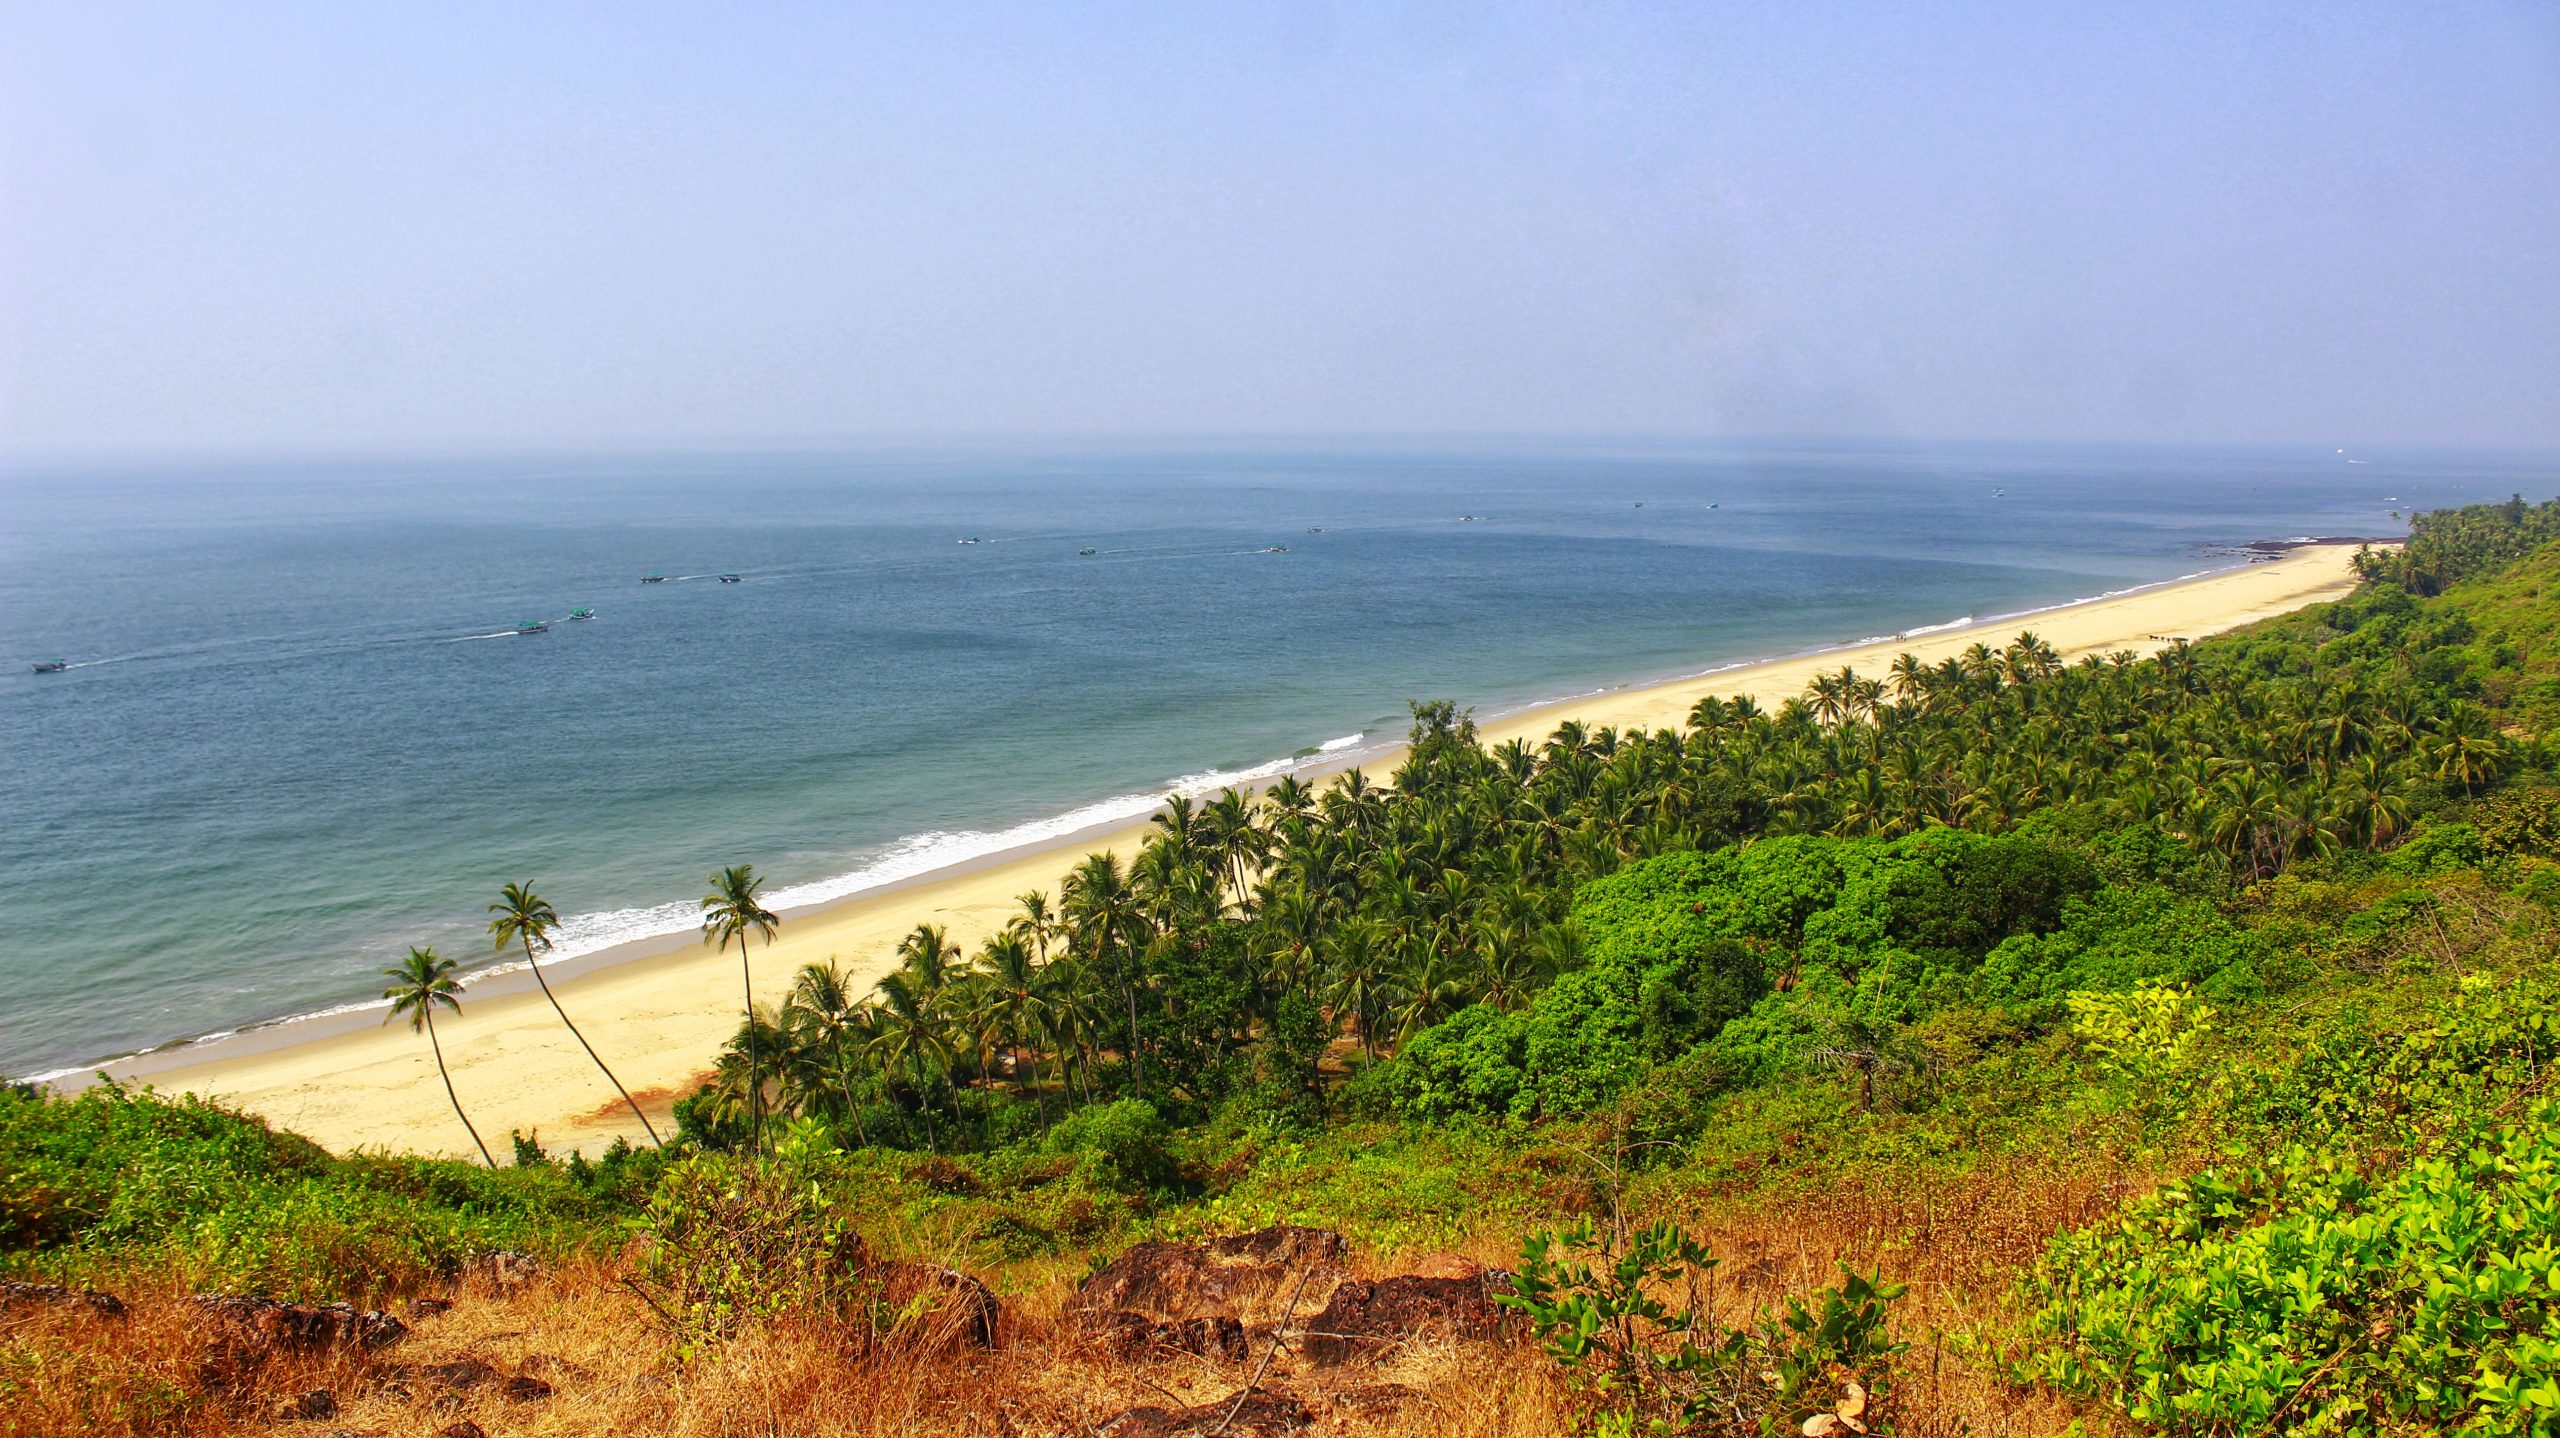 Nivati beach in Vengurla, Maharashtra